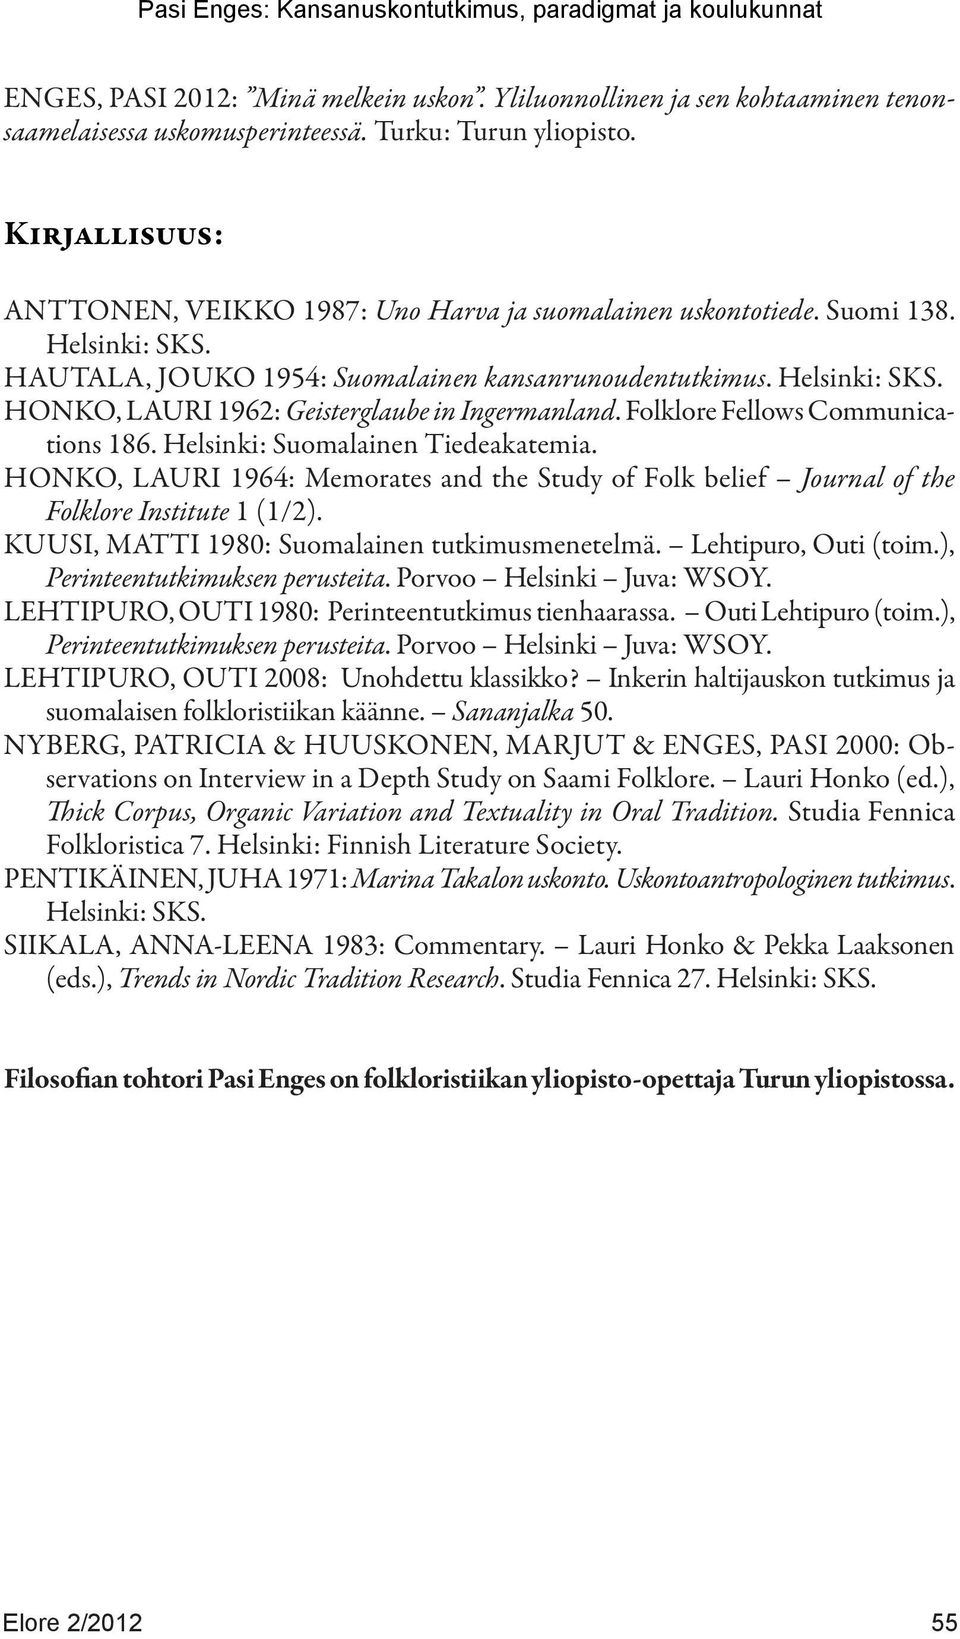 Folklore Fellows Communications 186. Helsinki: Suomalainen Tiedeakatemia. HONKO, LAURI 1964: Memorates and the Study of Folk belief Journal of the Folklore Institute 1 (1/2).